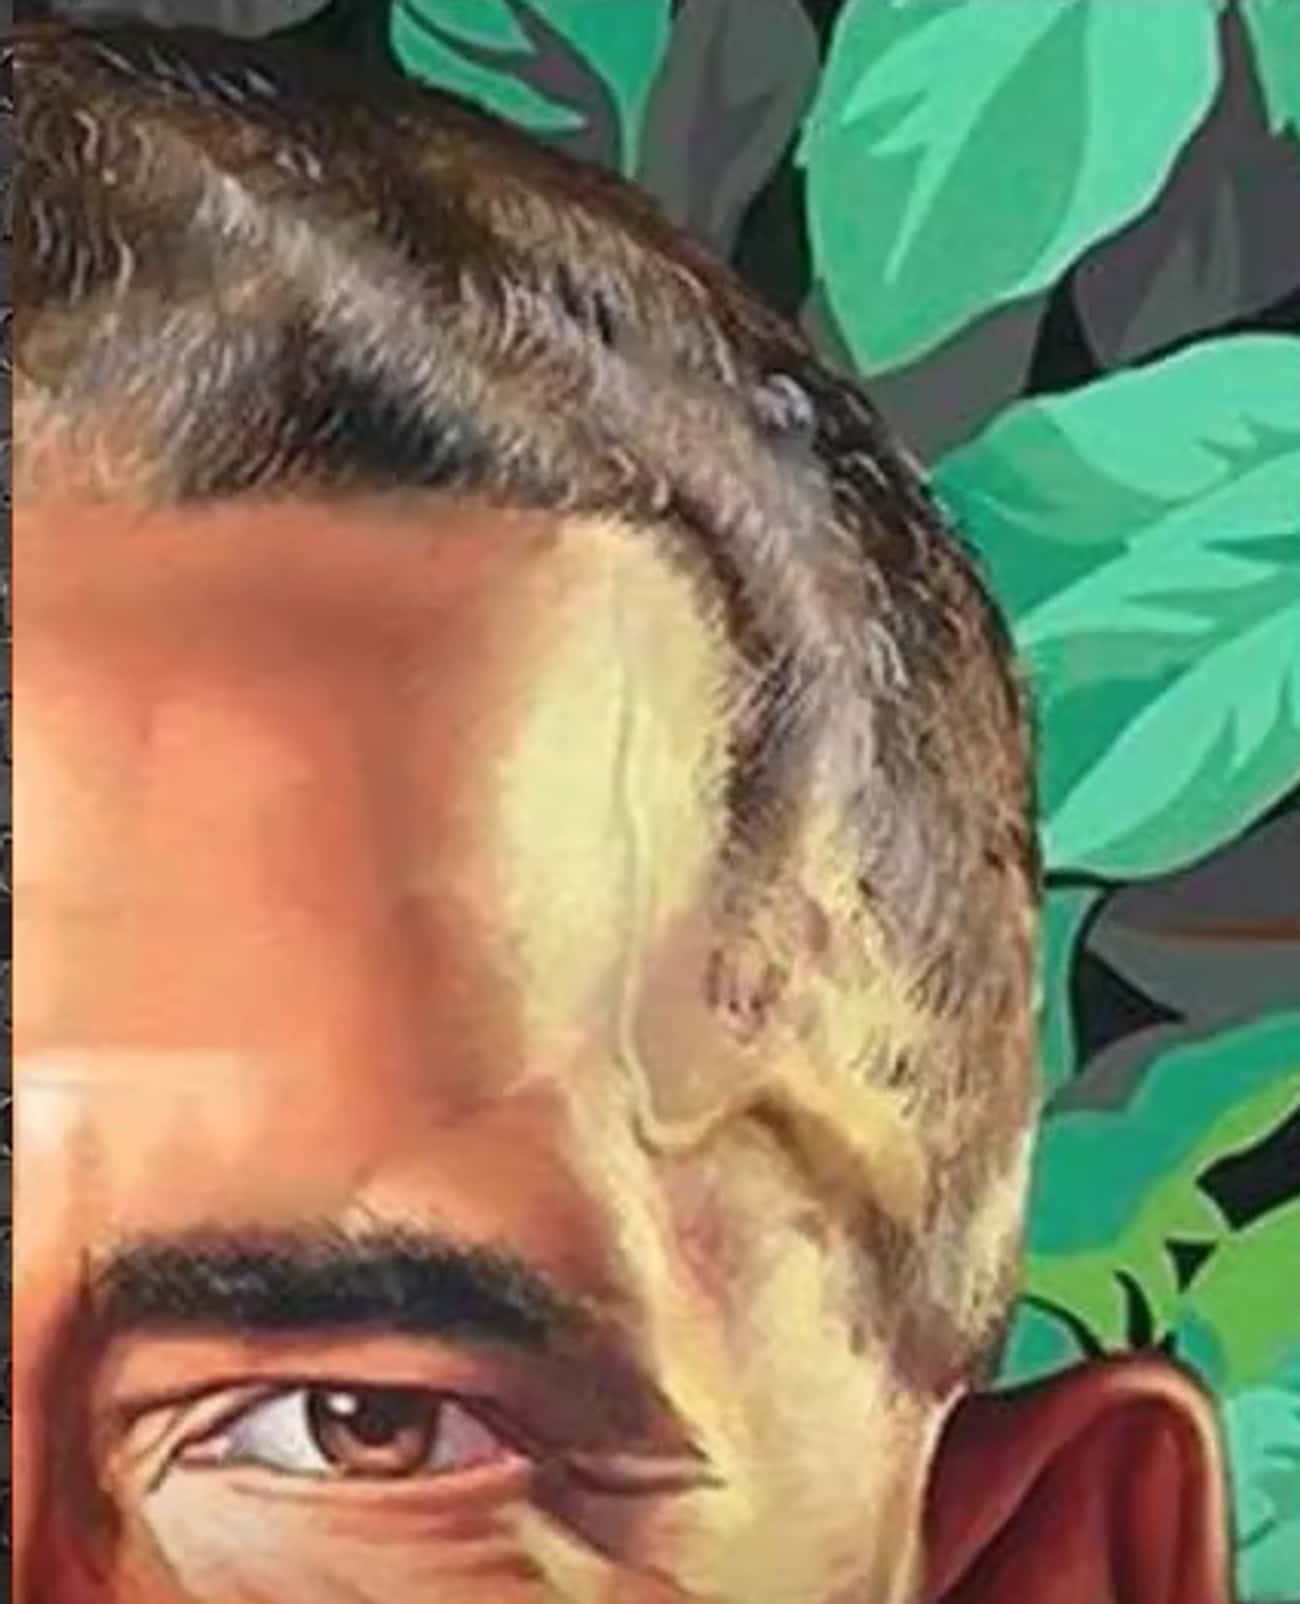 Barack Obama’s “Seminal” Portrait